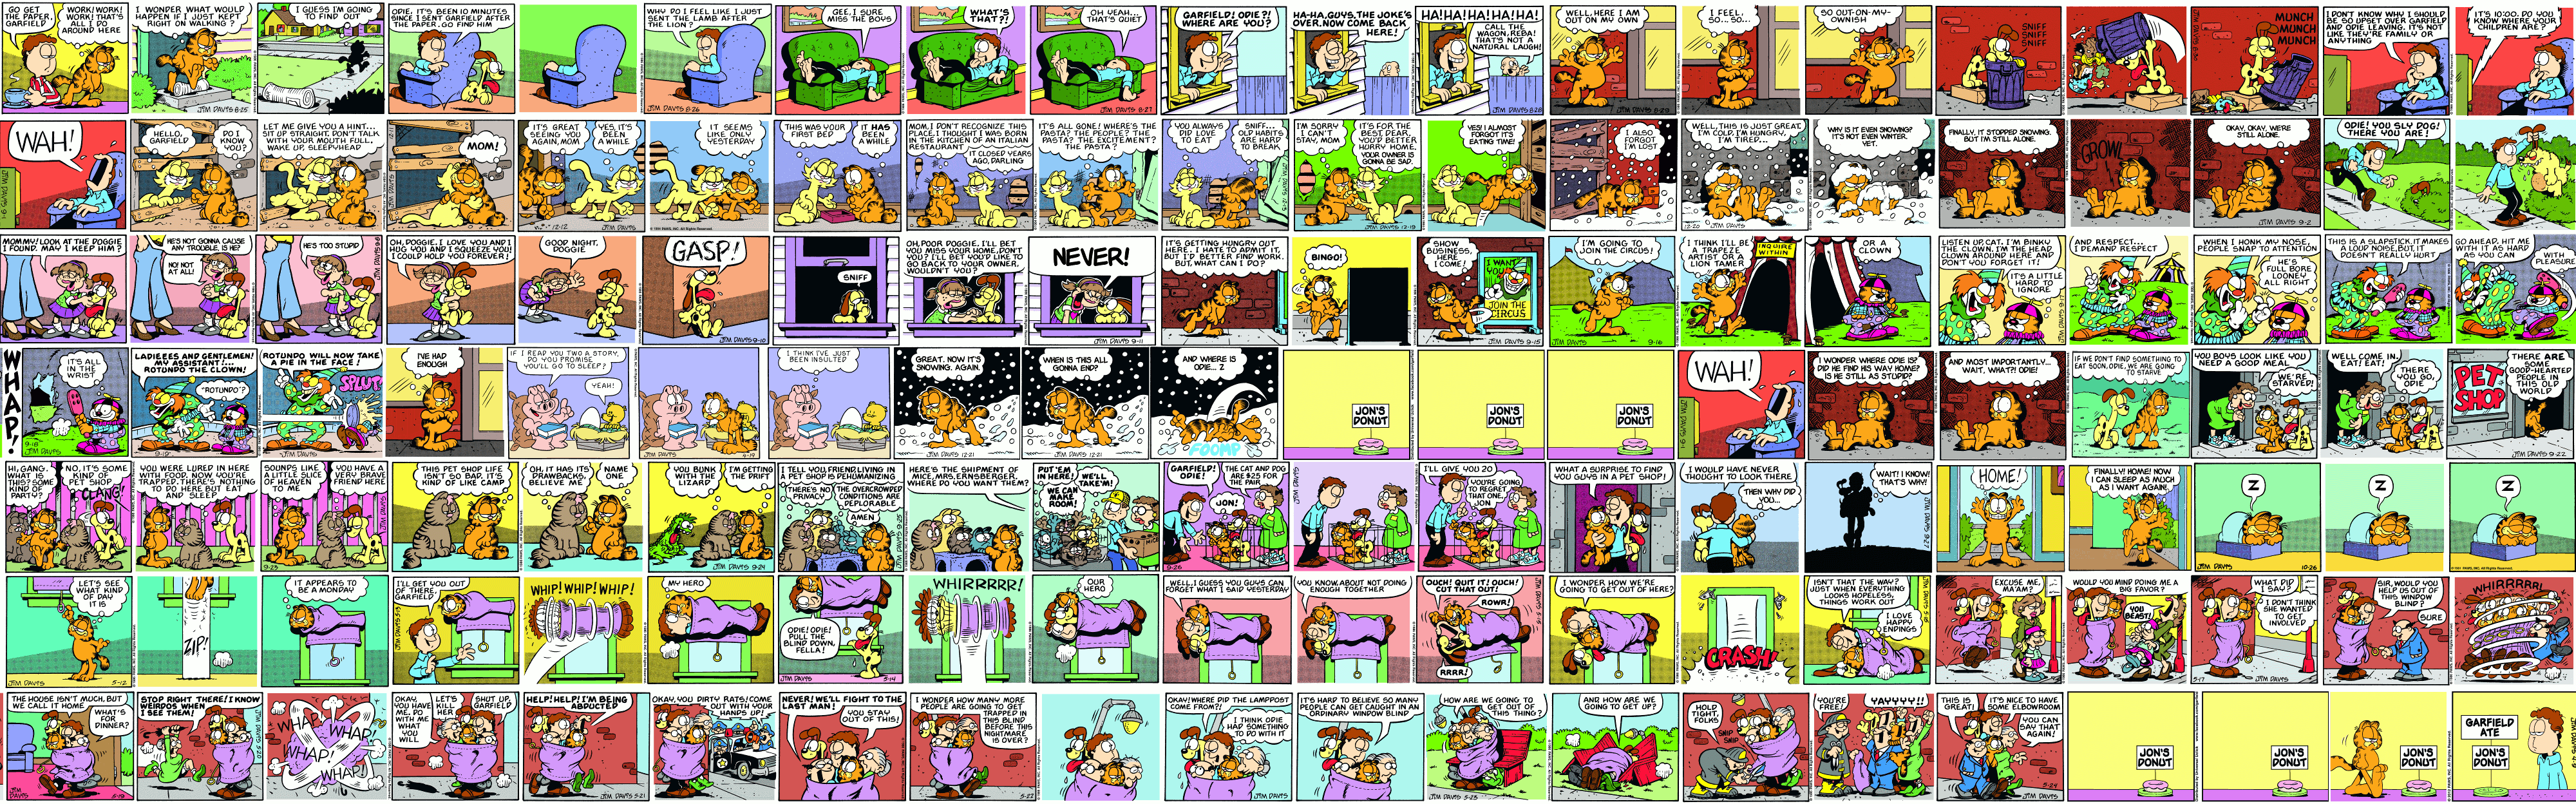 Garfield's Epic Adventure